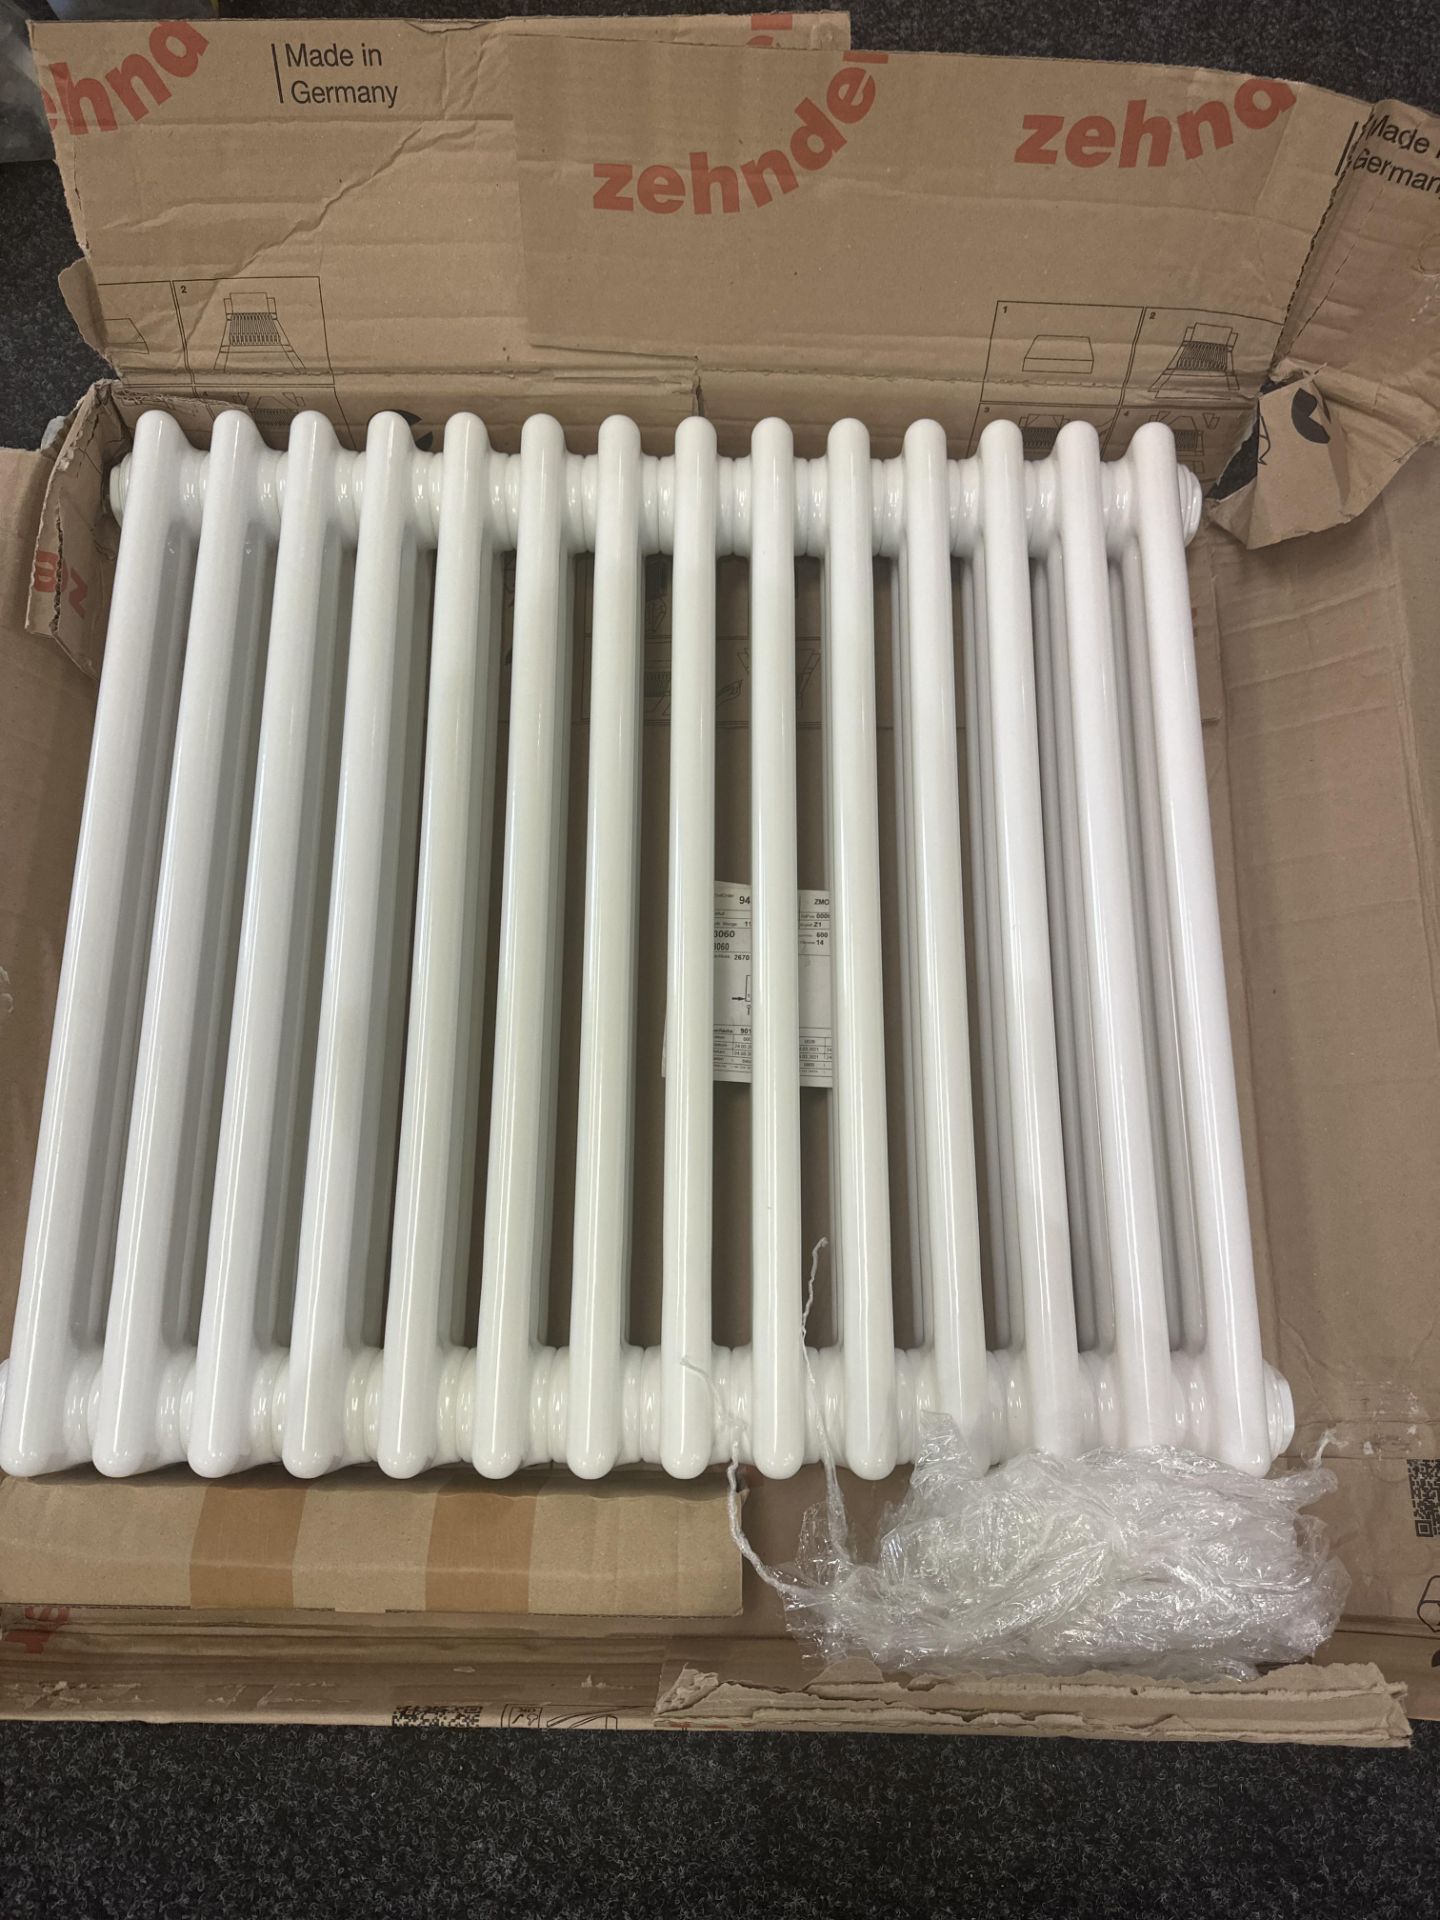 1 x zehnder Charleston white radiator with fixing kits